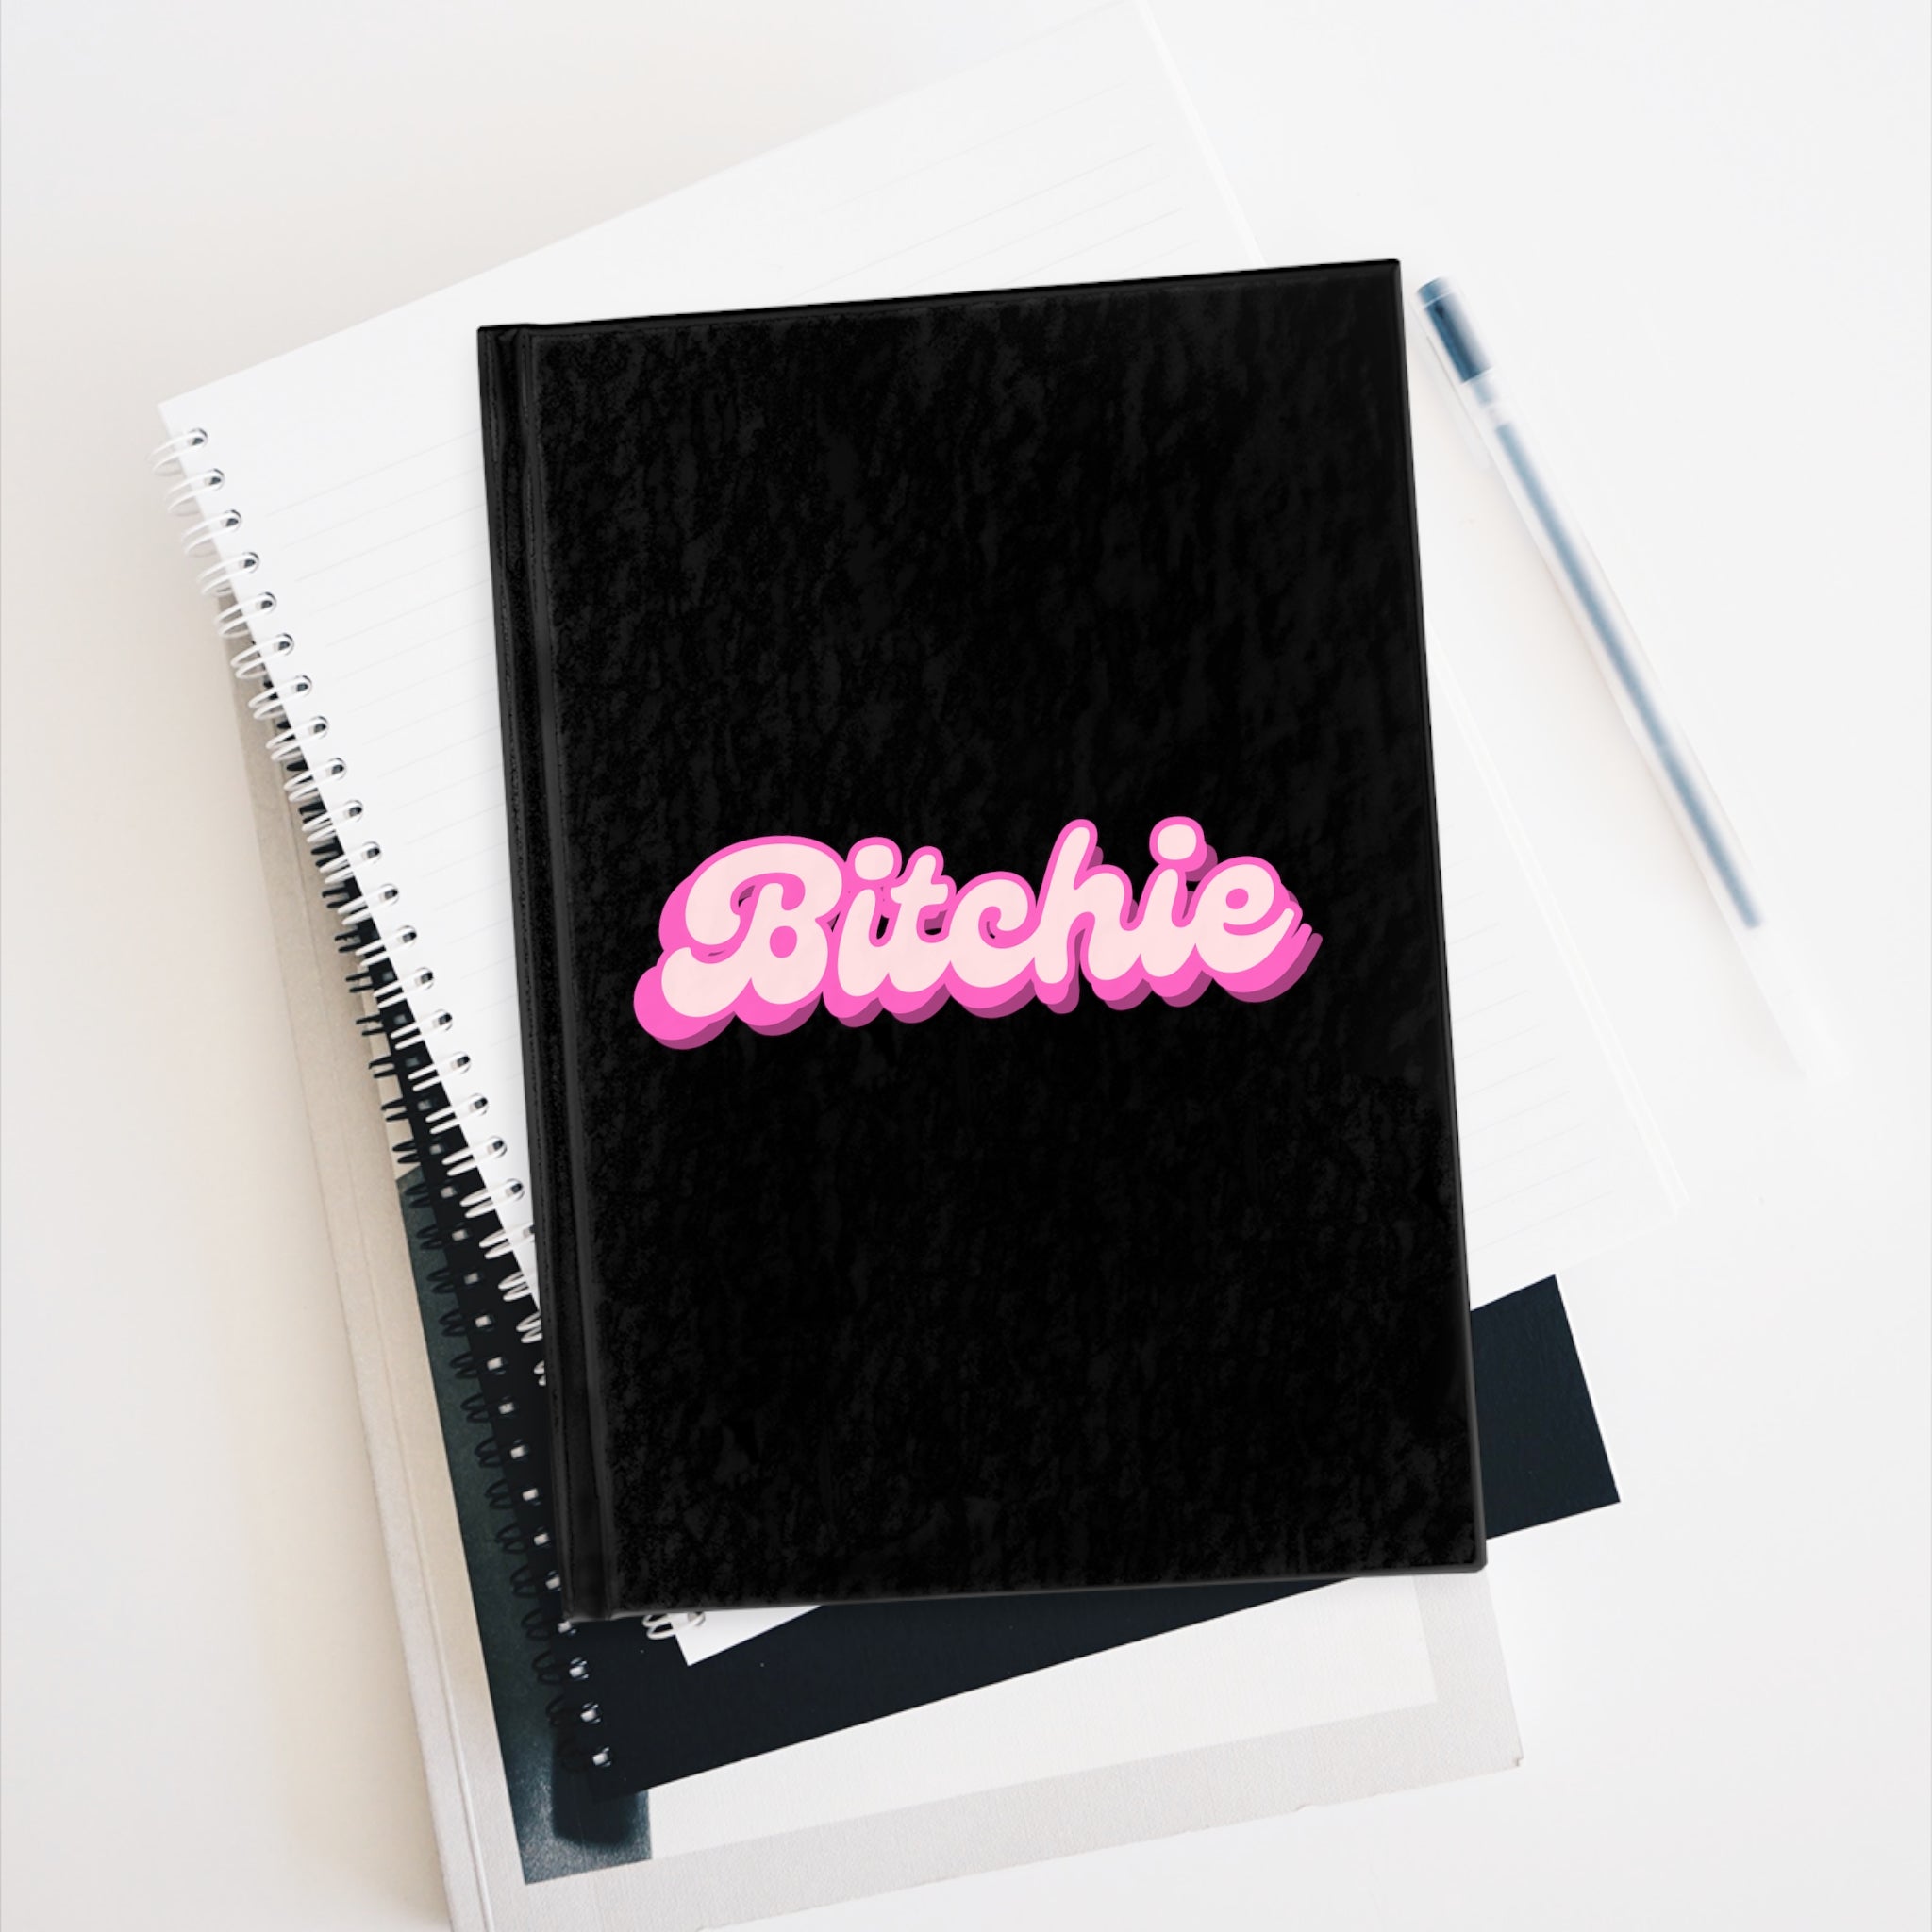 Barbie-Themed "Bitchie" Journal - Ruled Line (Black), Lined Notebook, Gratitude Journal